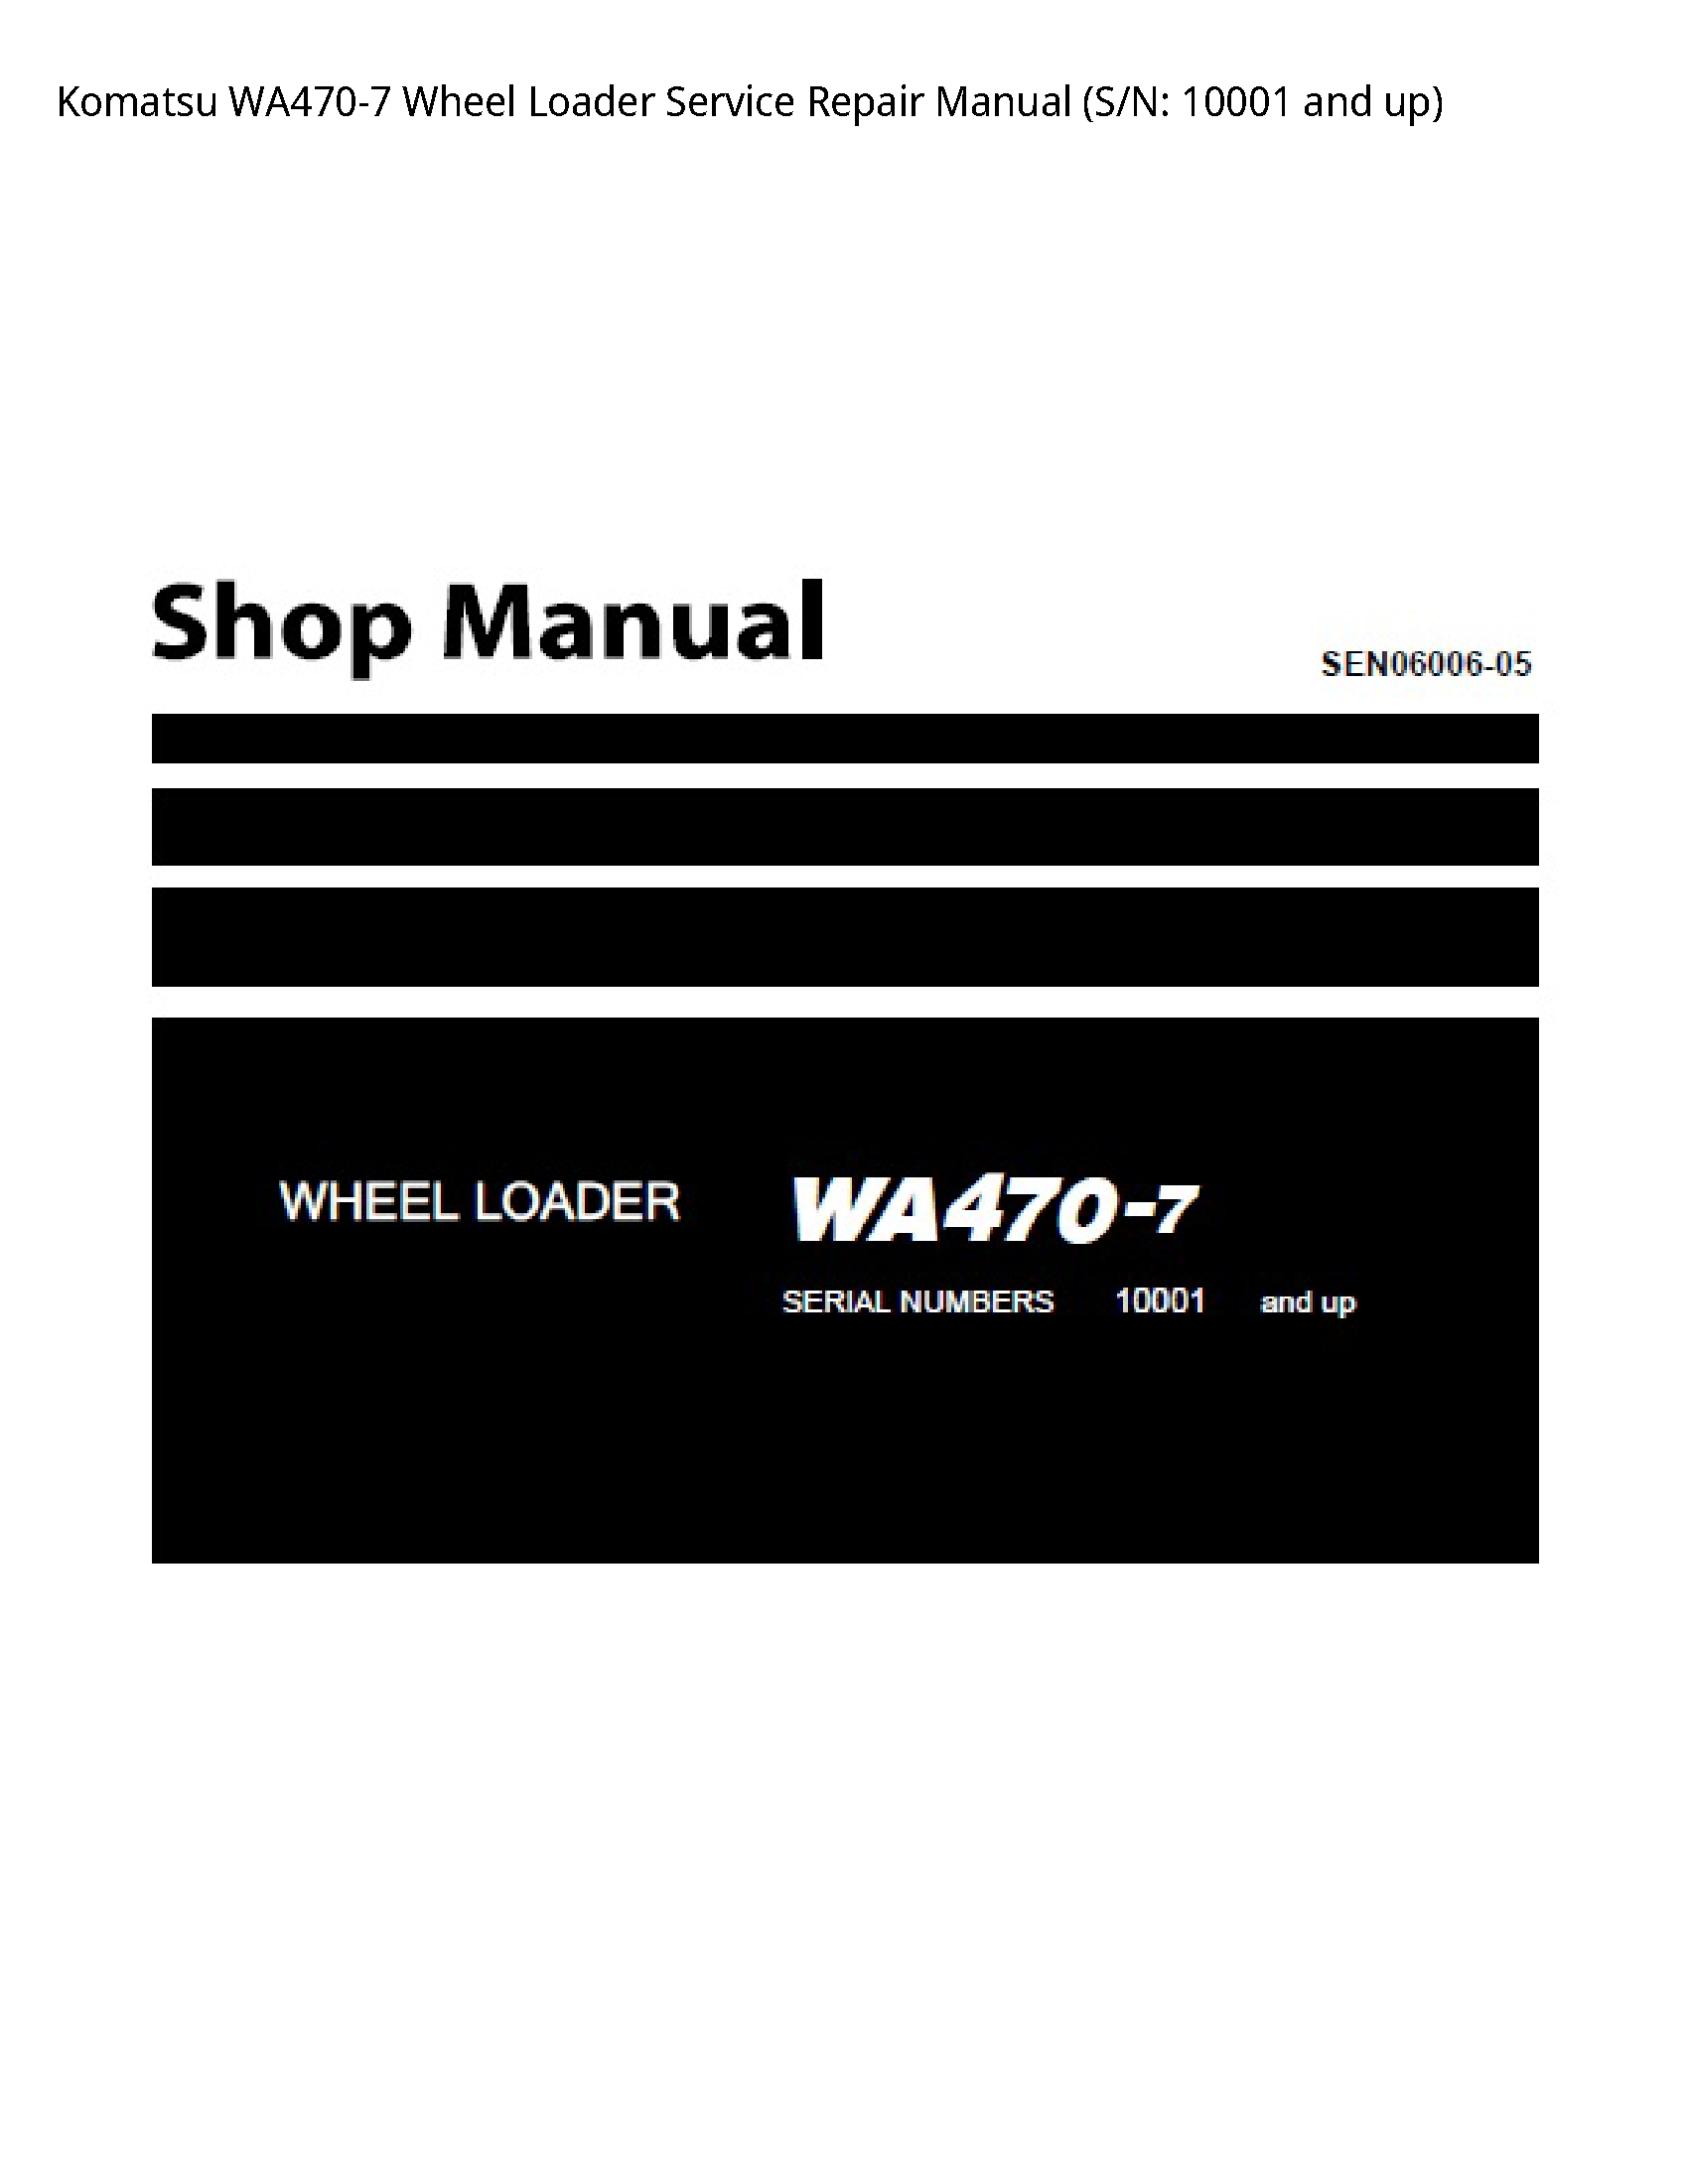 KOMATSU WA470-7 Wheel Loader manual